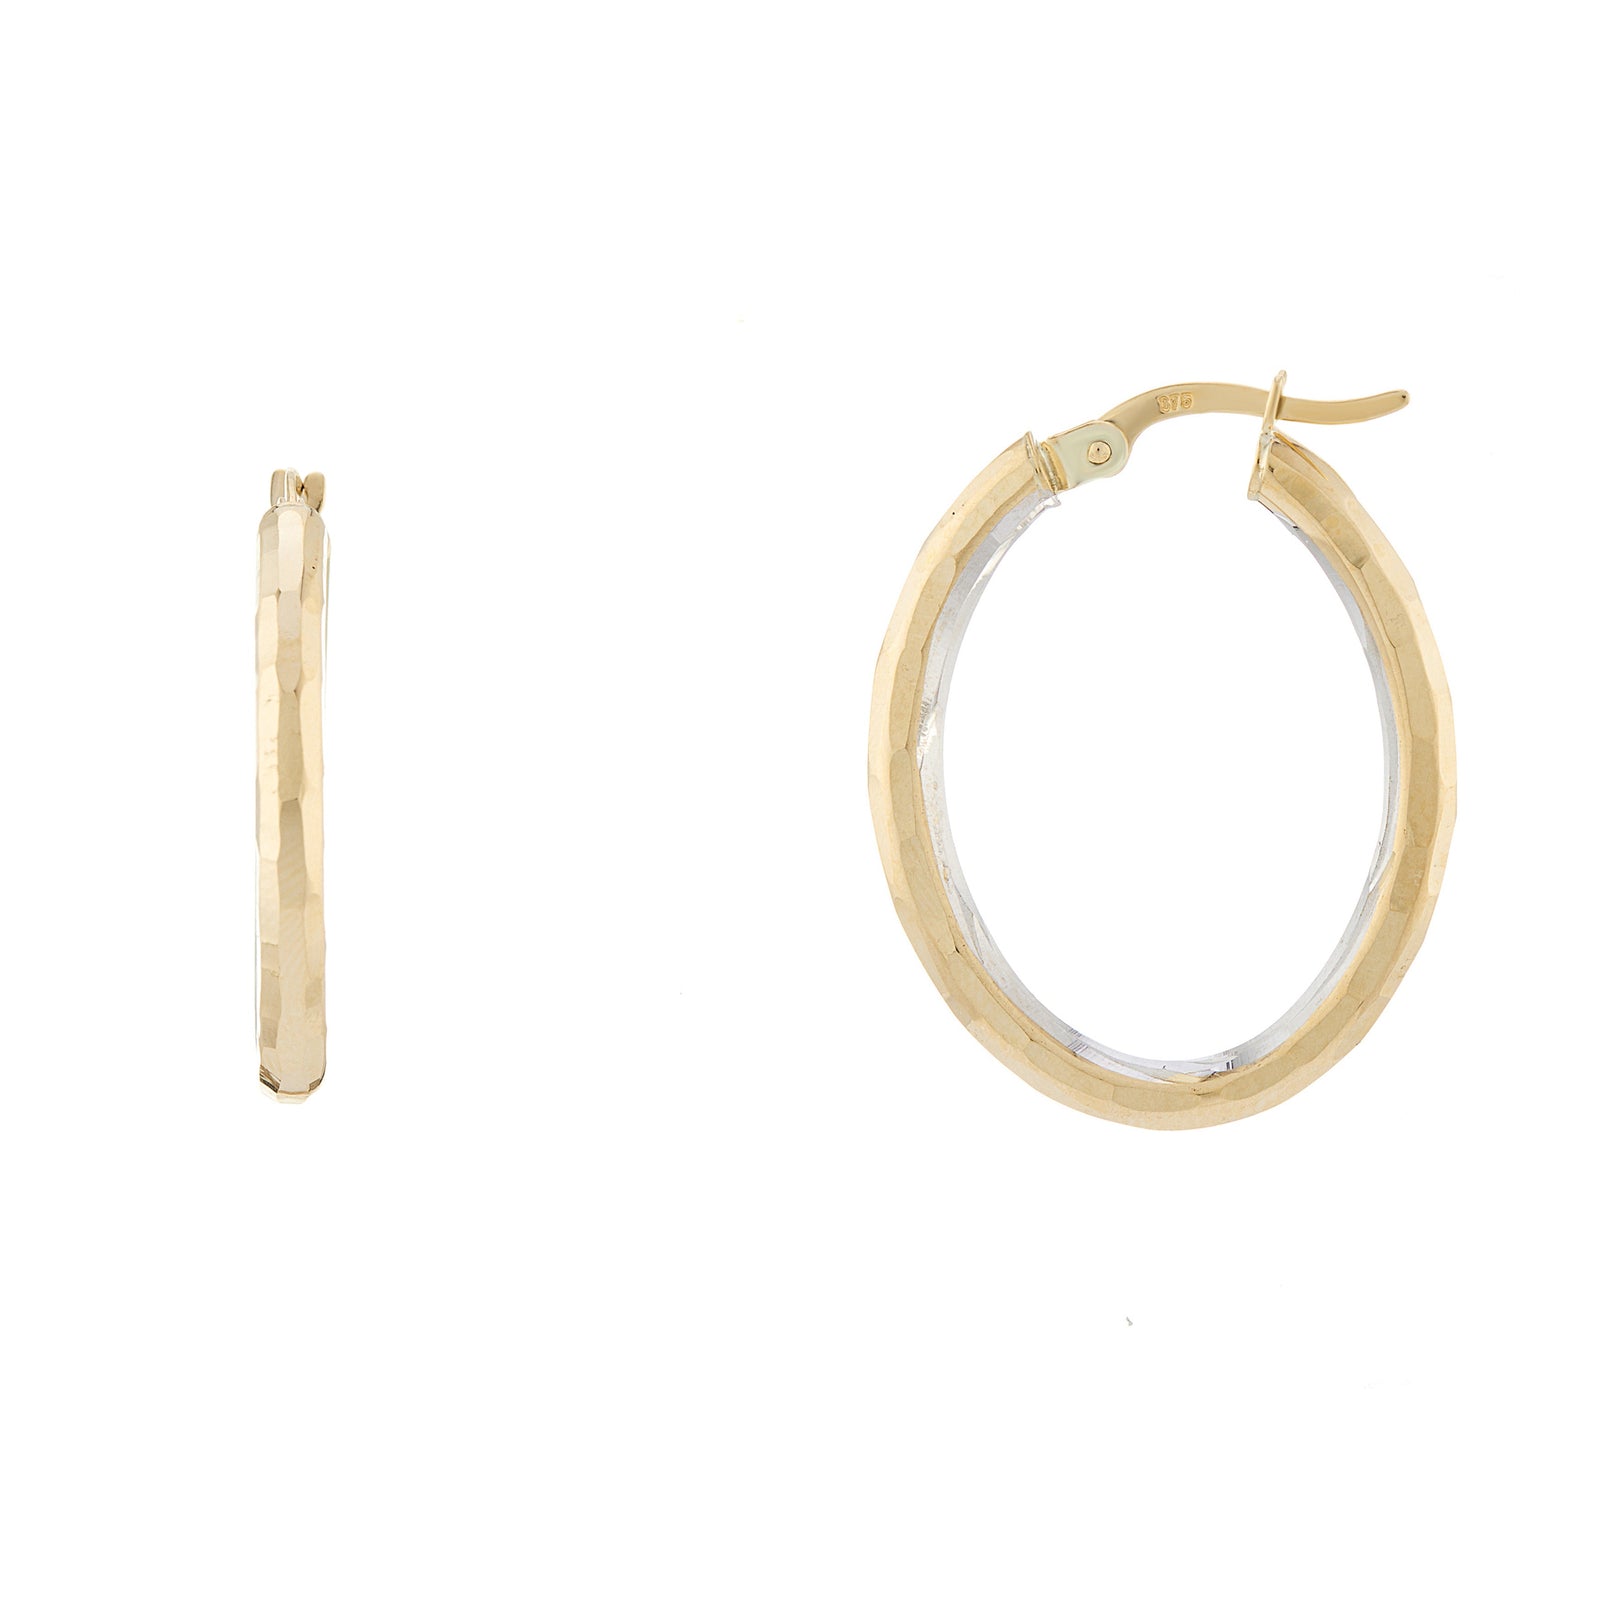 9ct gold 16mm x 20mm diamond cut hoop earrings with inside rhodiumed